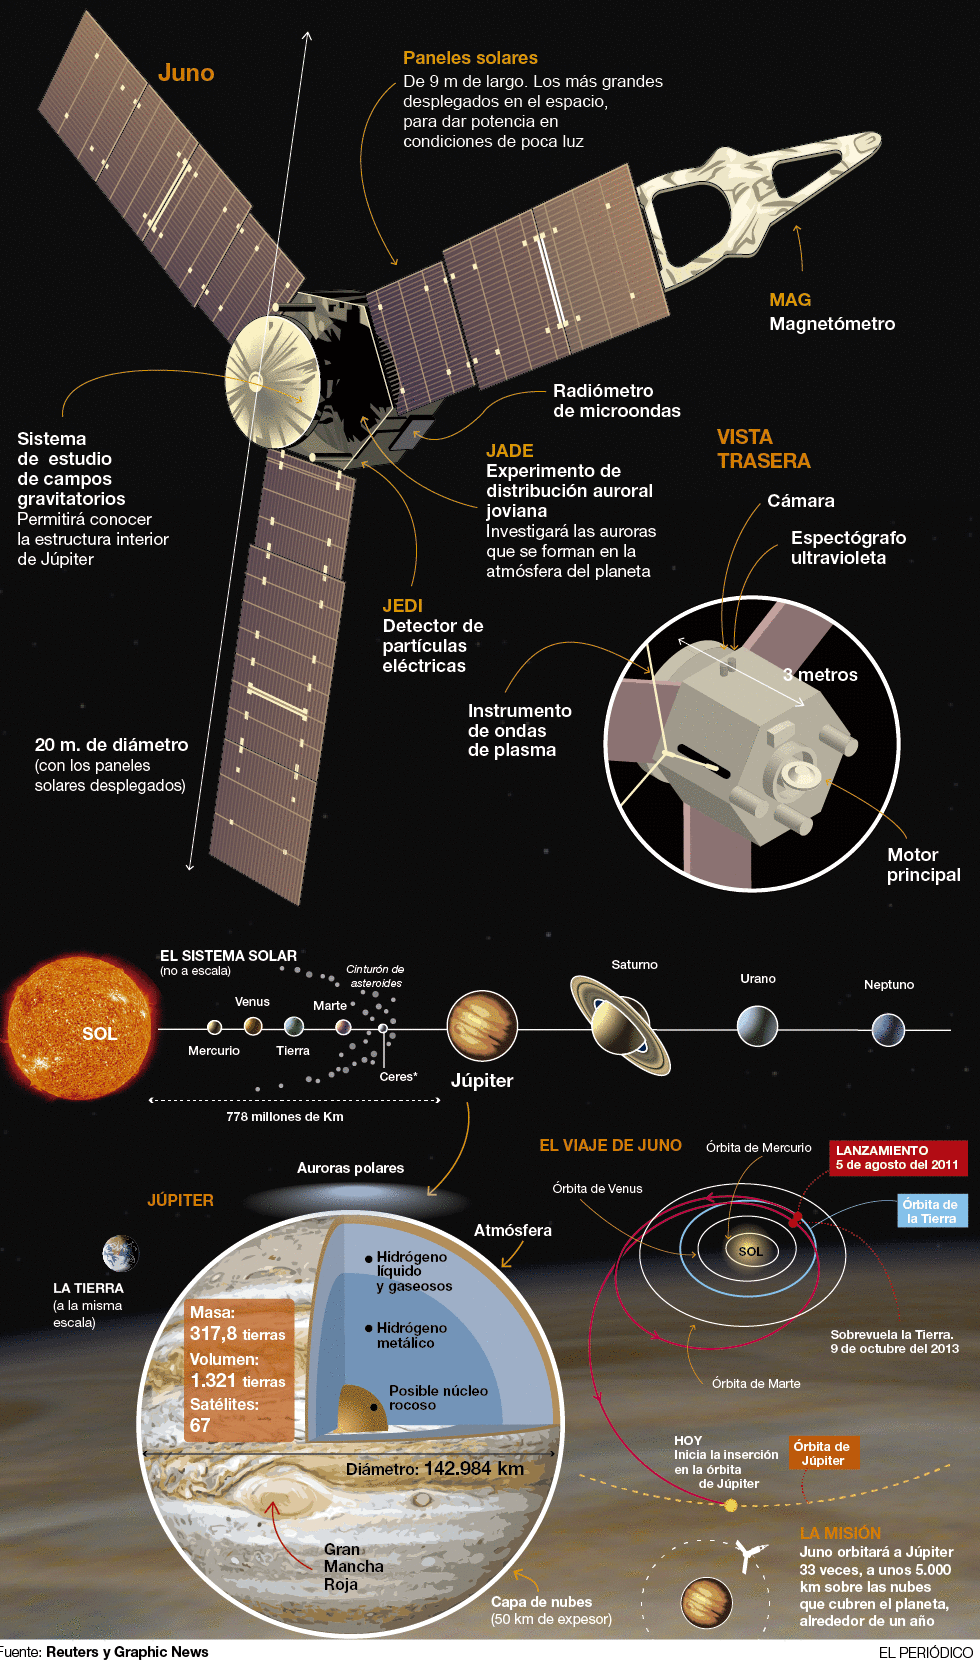 La nave espacial Juno se acerca a Jpiter